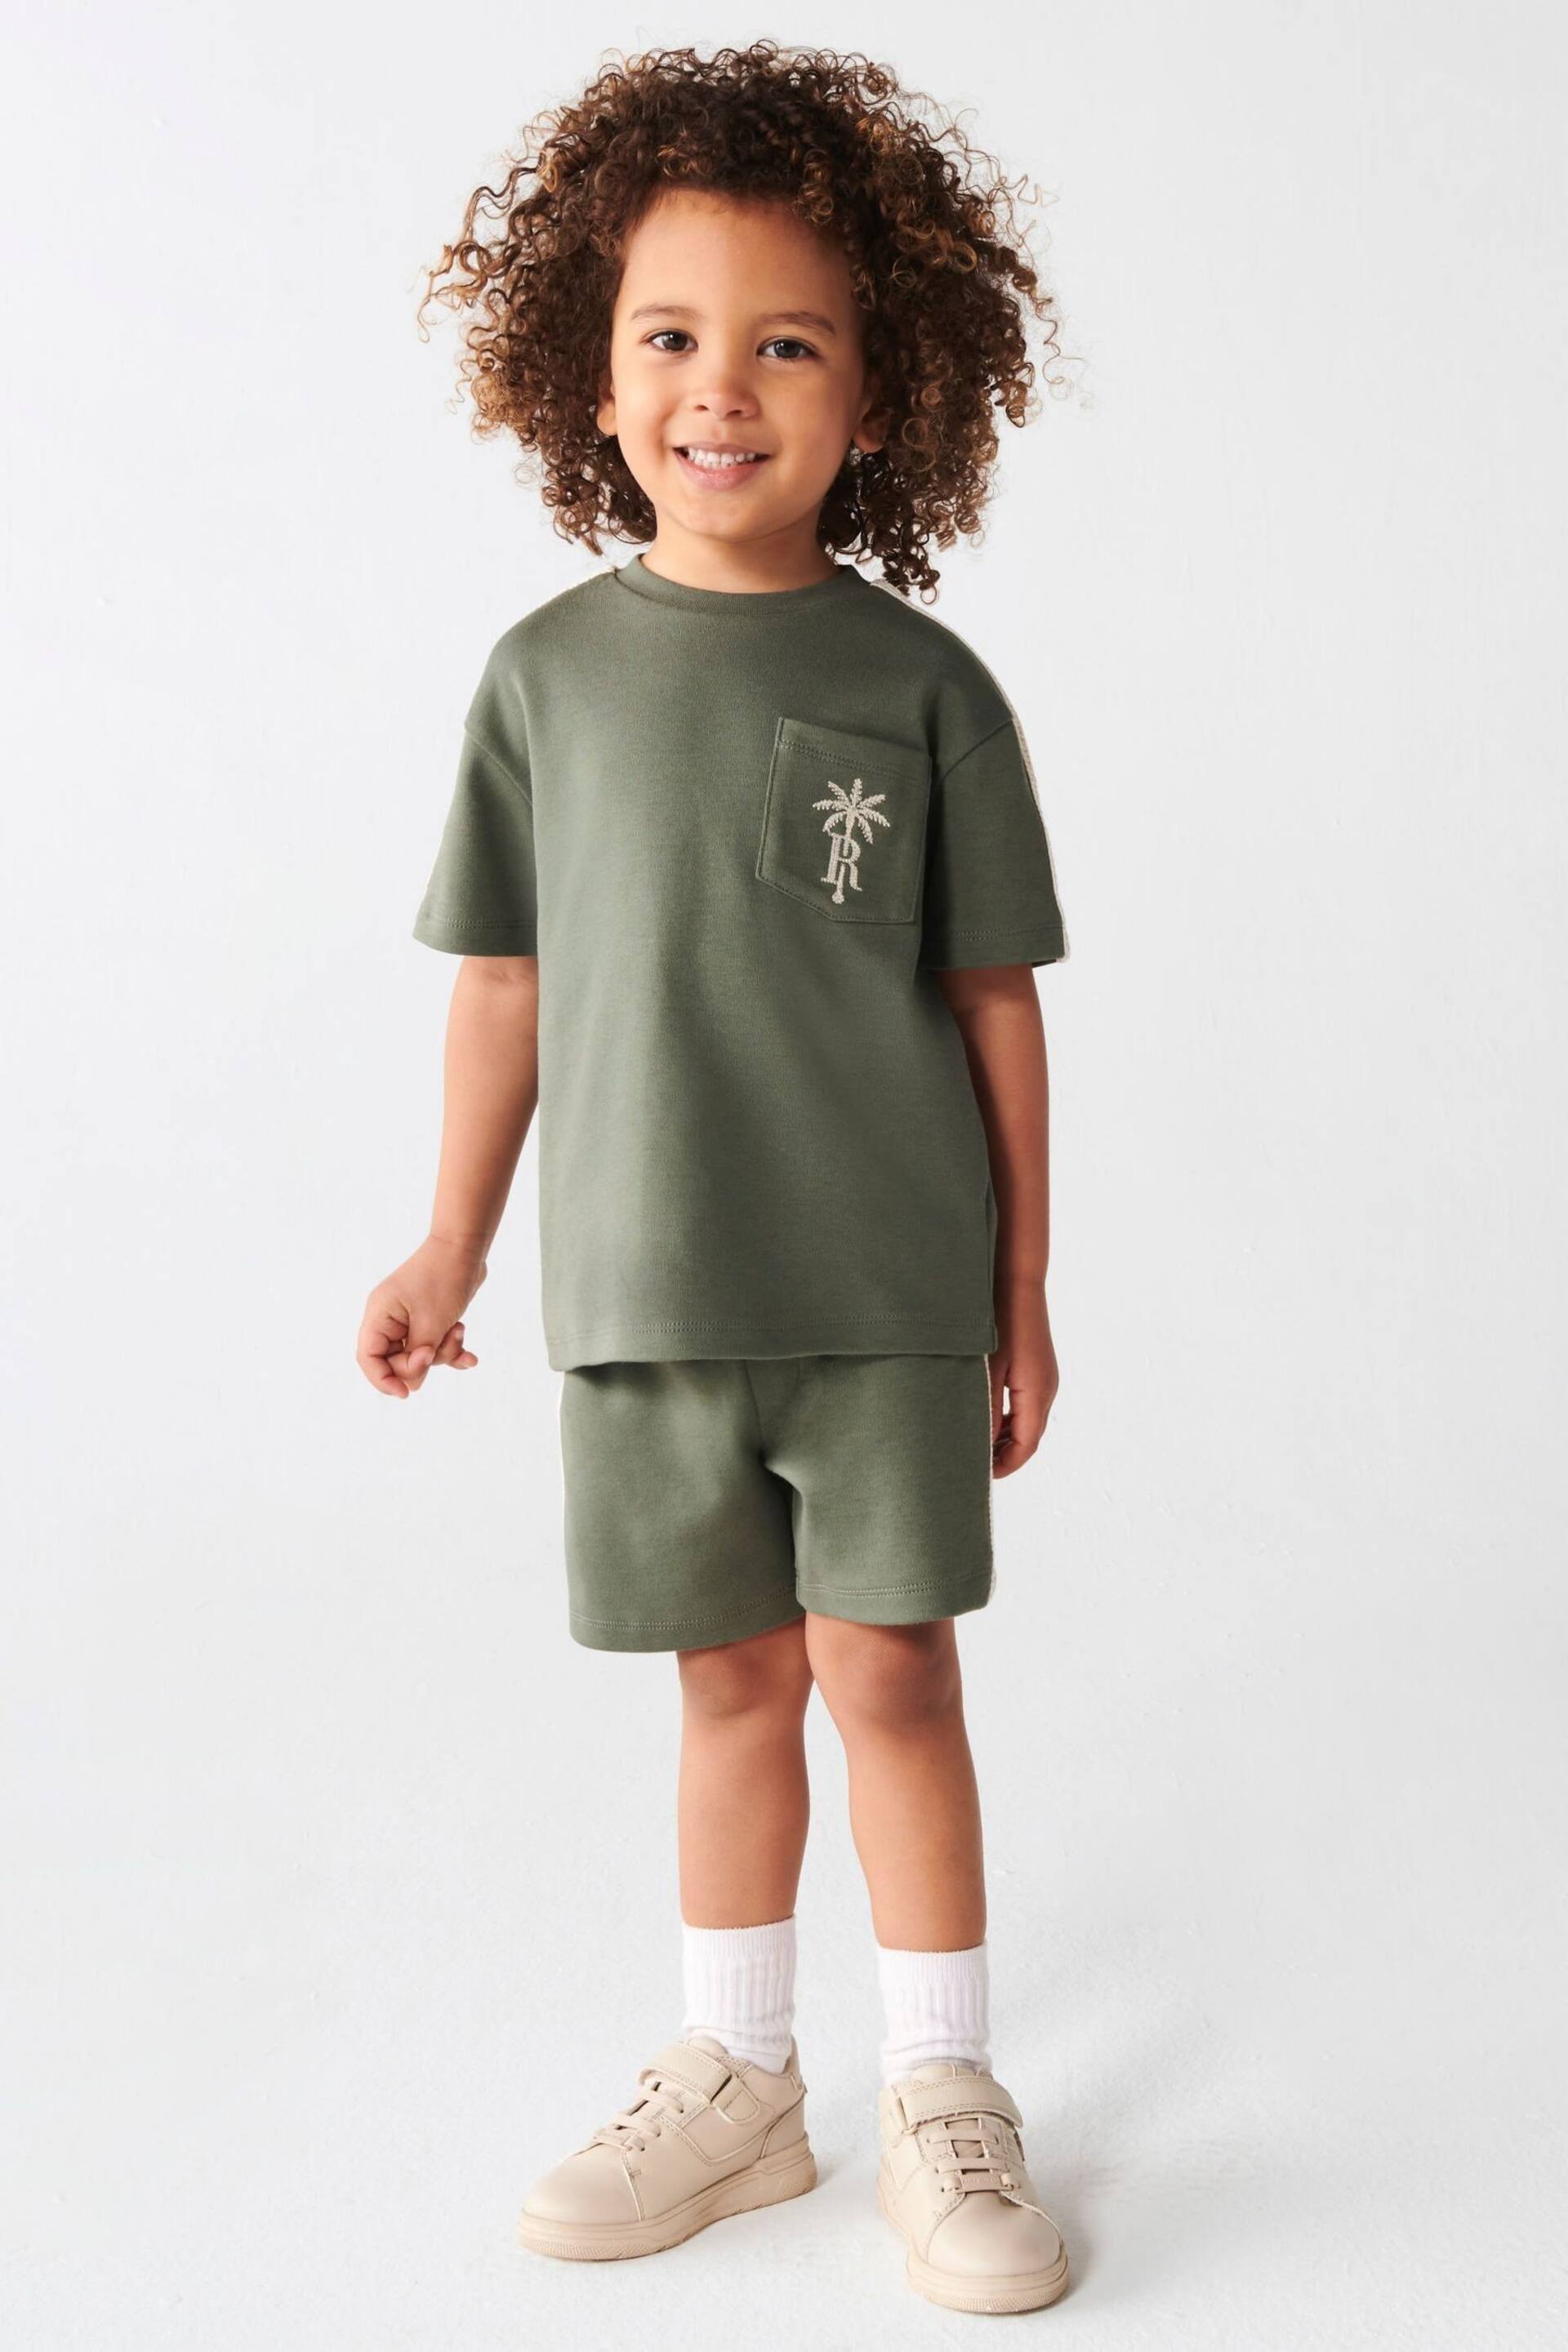 River Island Green Boys Crochet Tape T-Shirt Set - Image 2 of 4